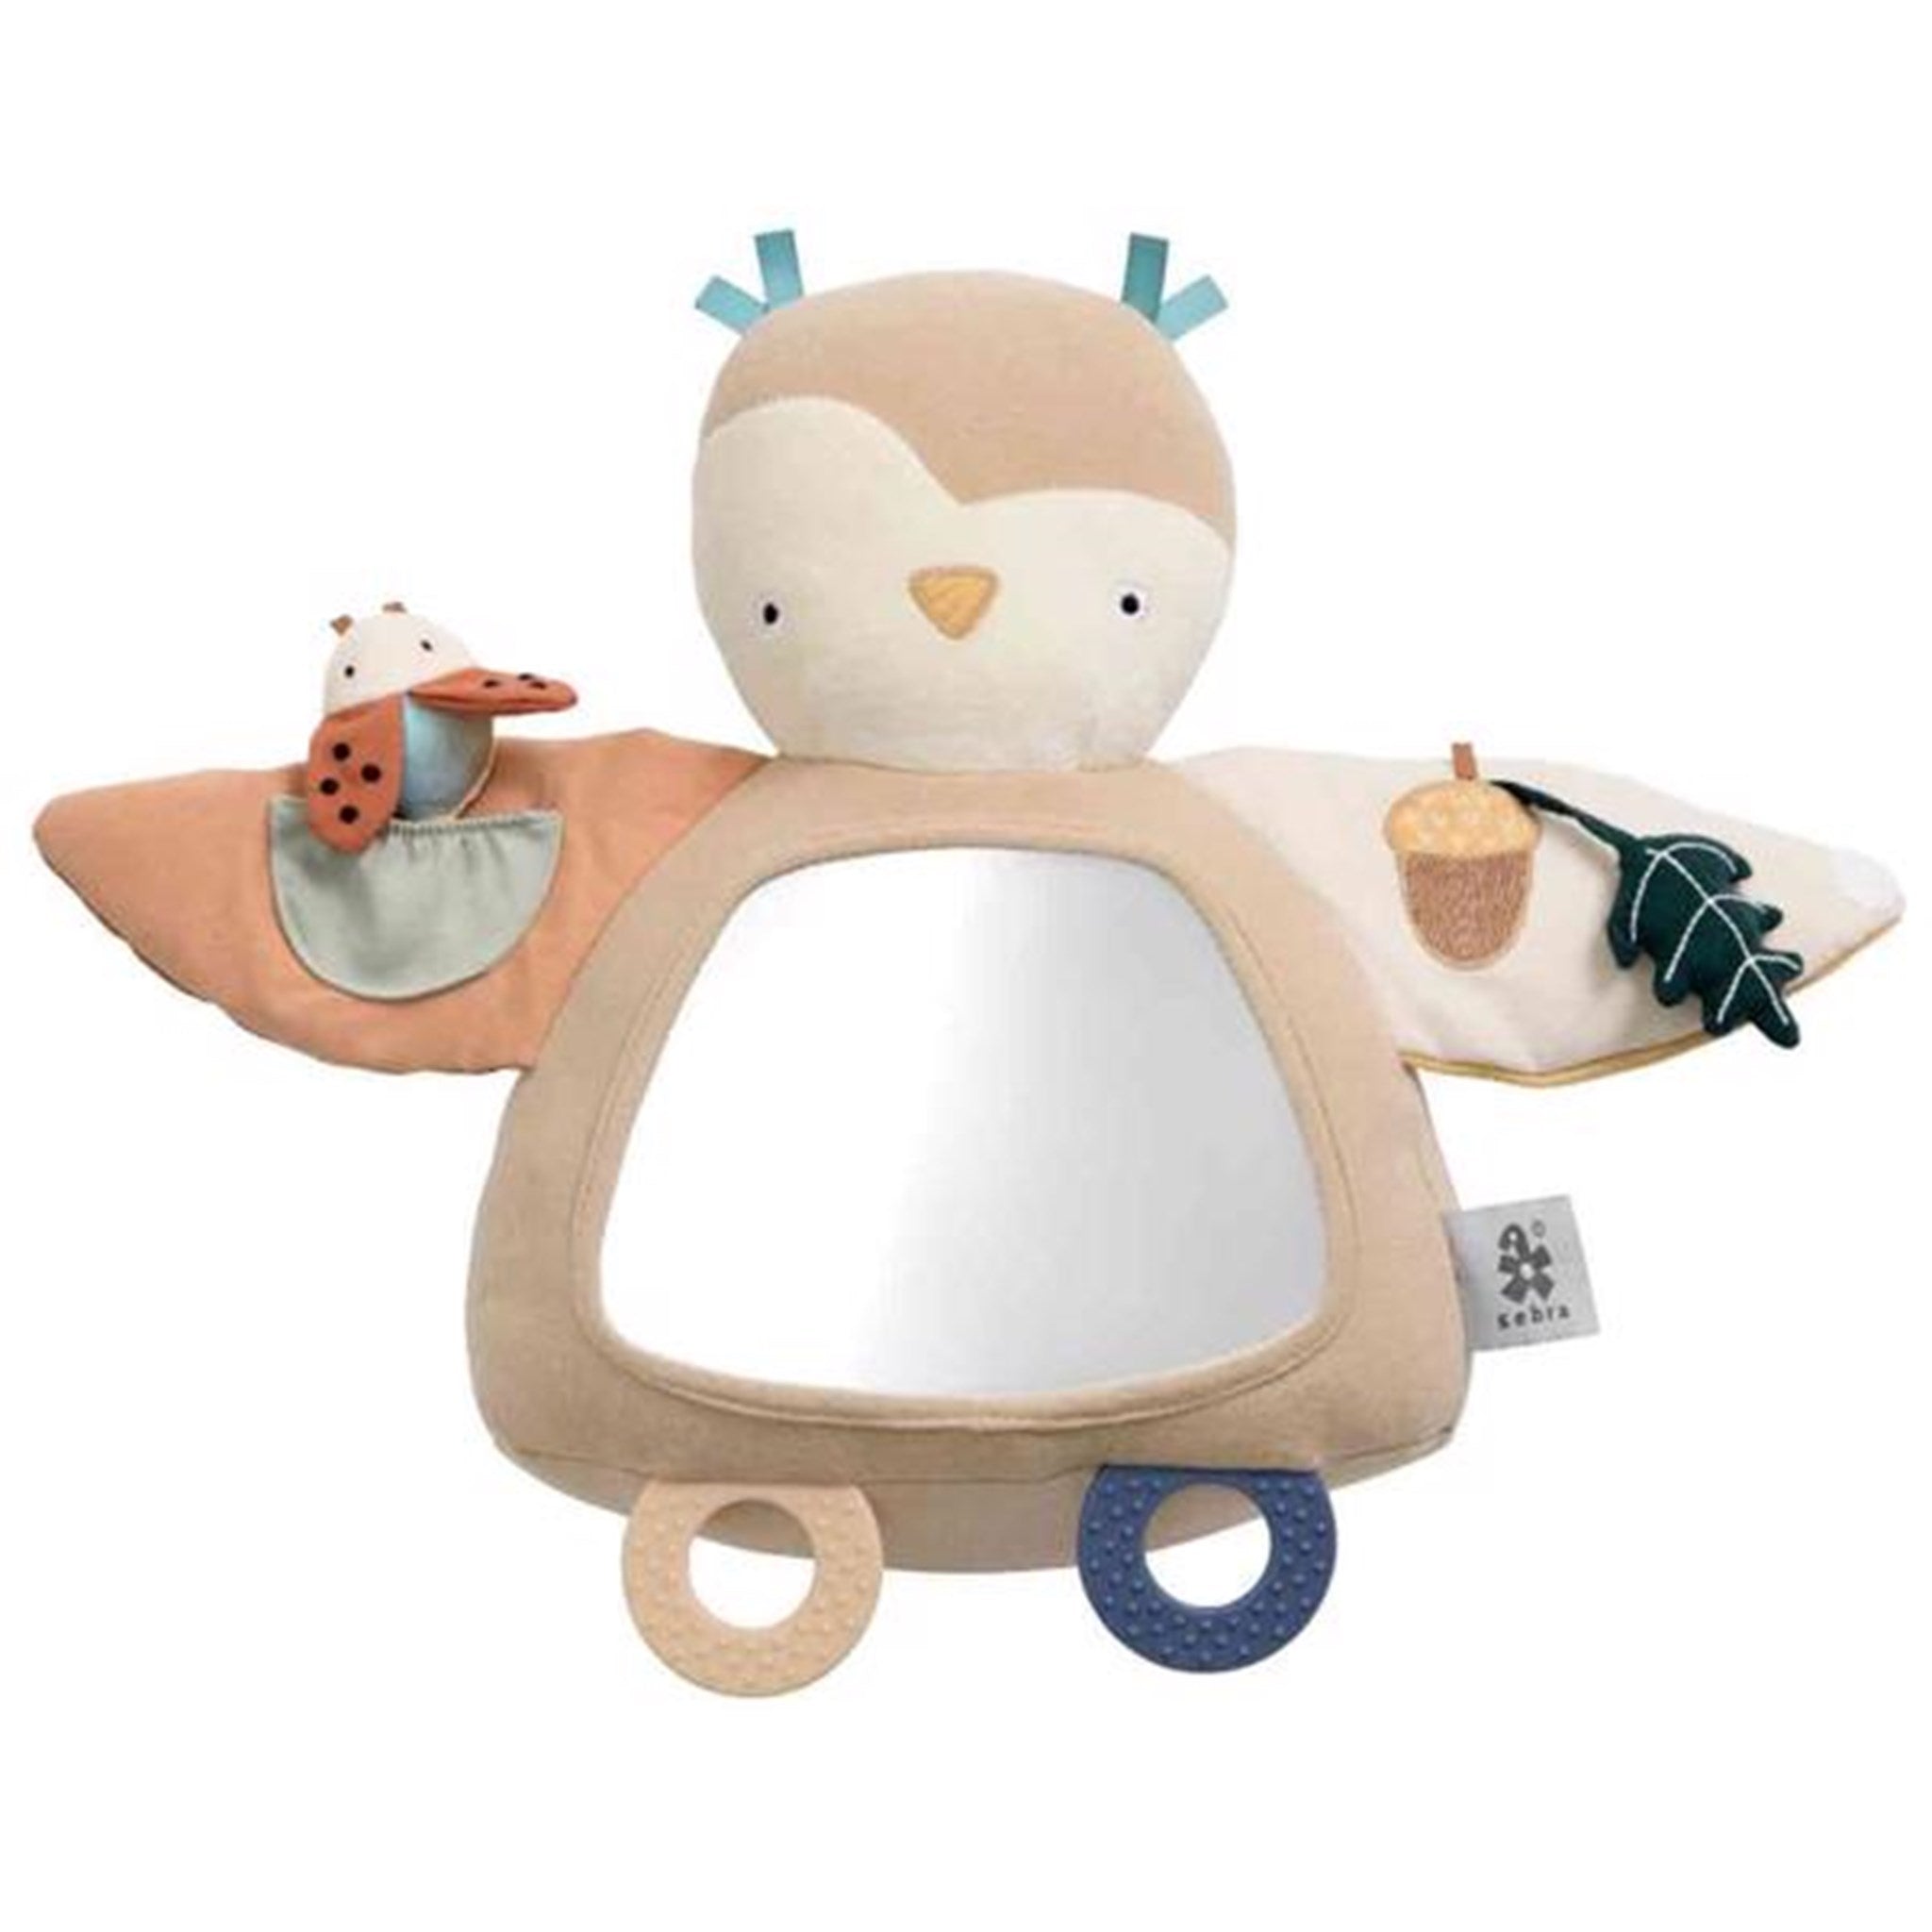 Sebra Activity Toy Blinky the Owl